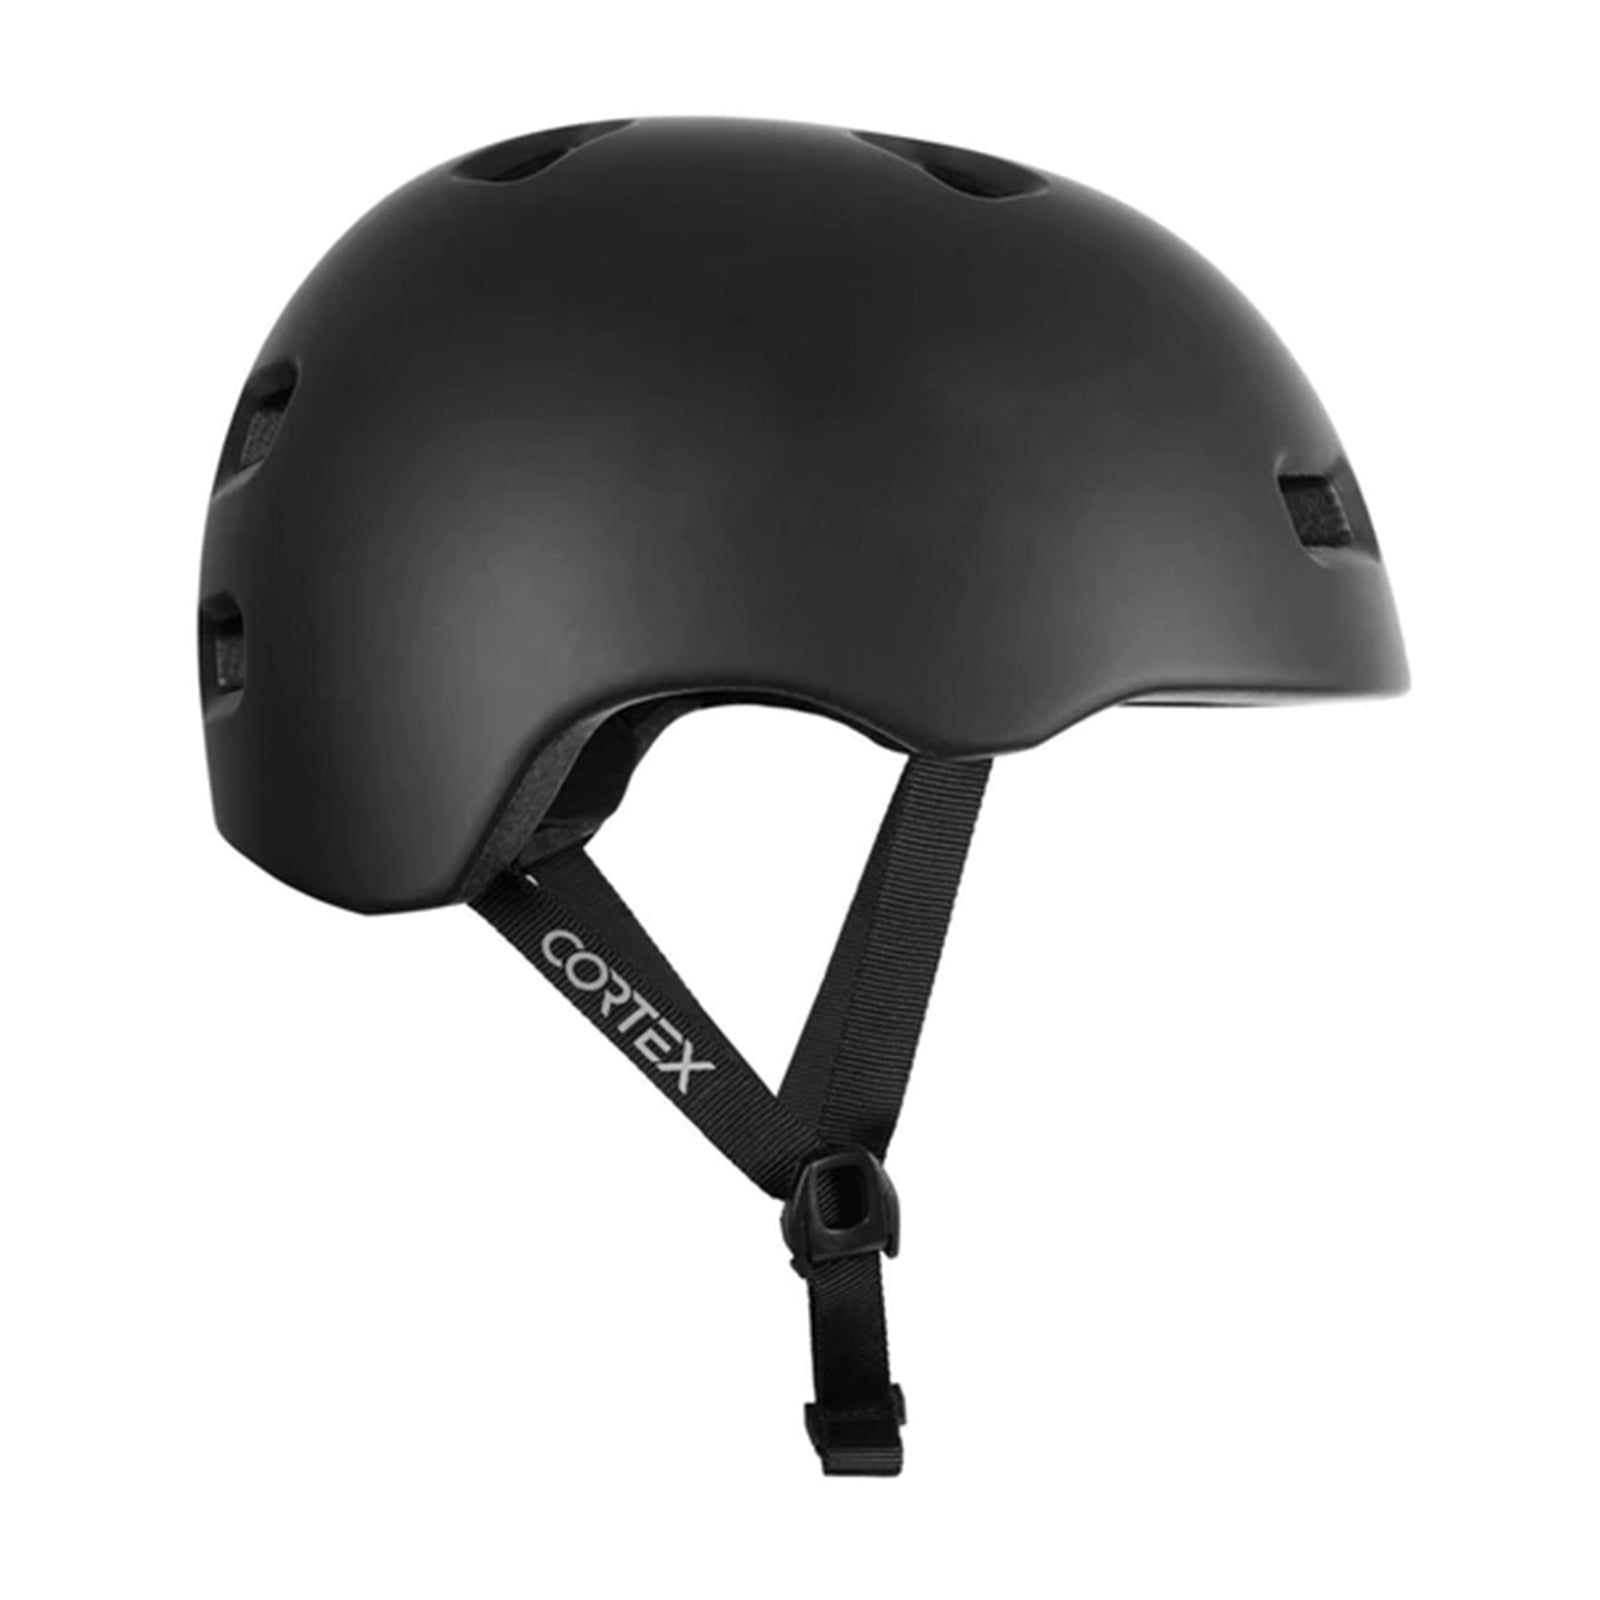 The Sleeper Protective Helmet Matte Black - Gain Protection Certified